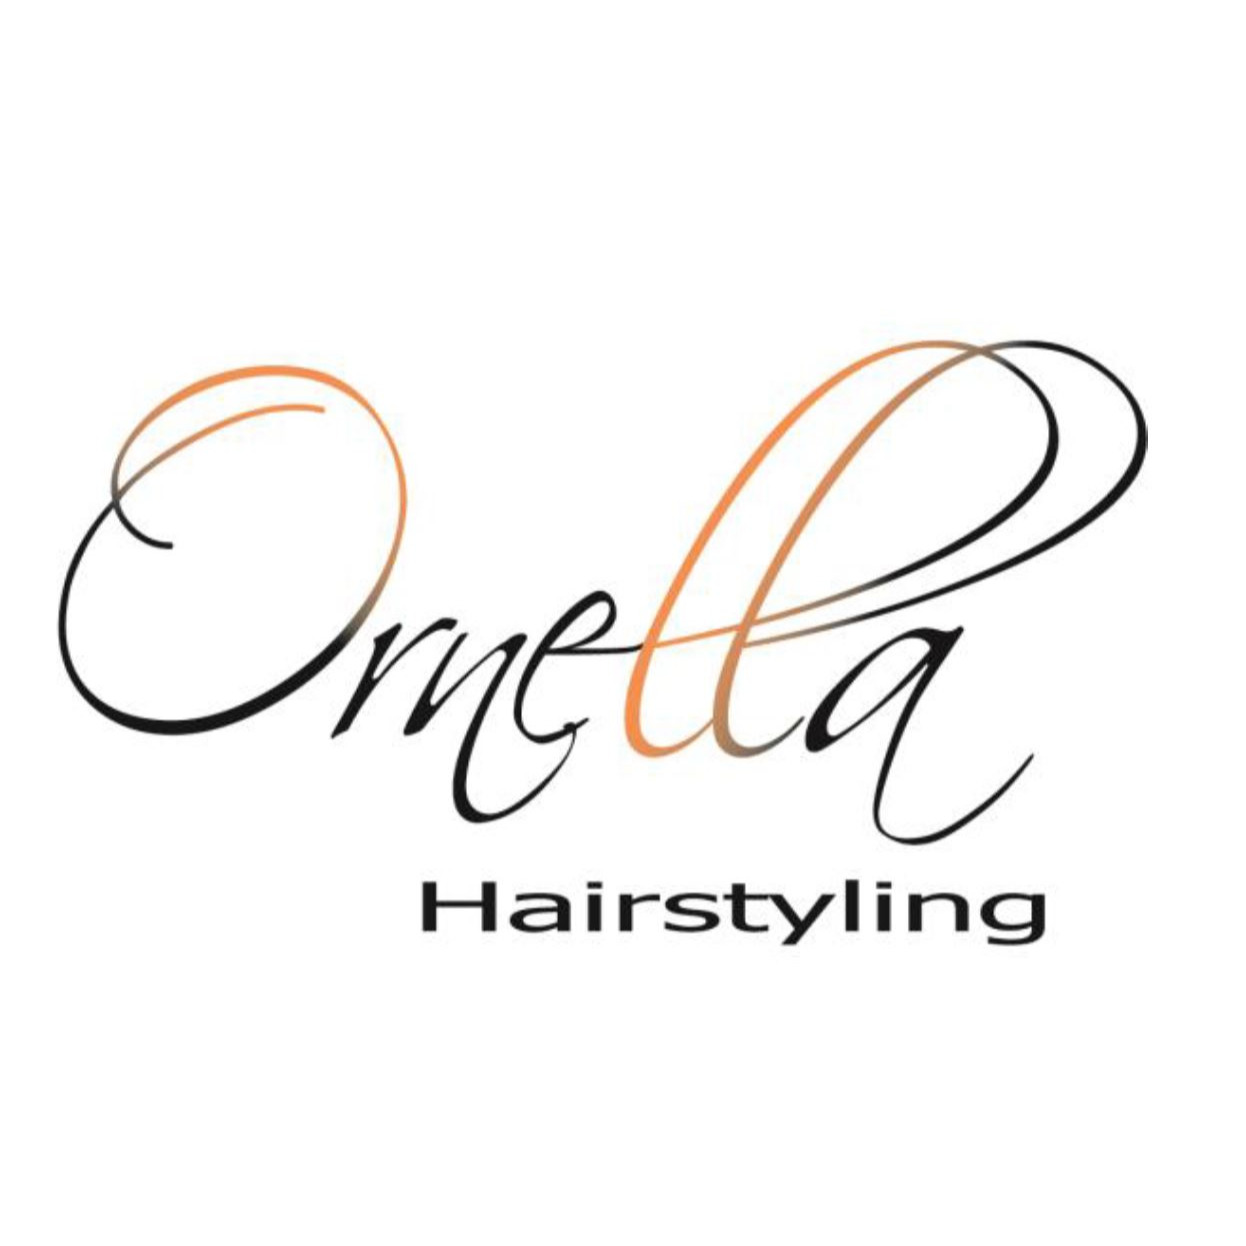 Ornella Hairstyling Logo